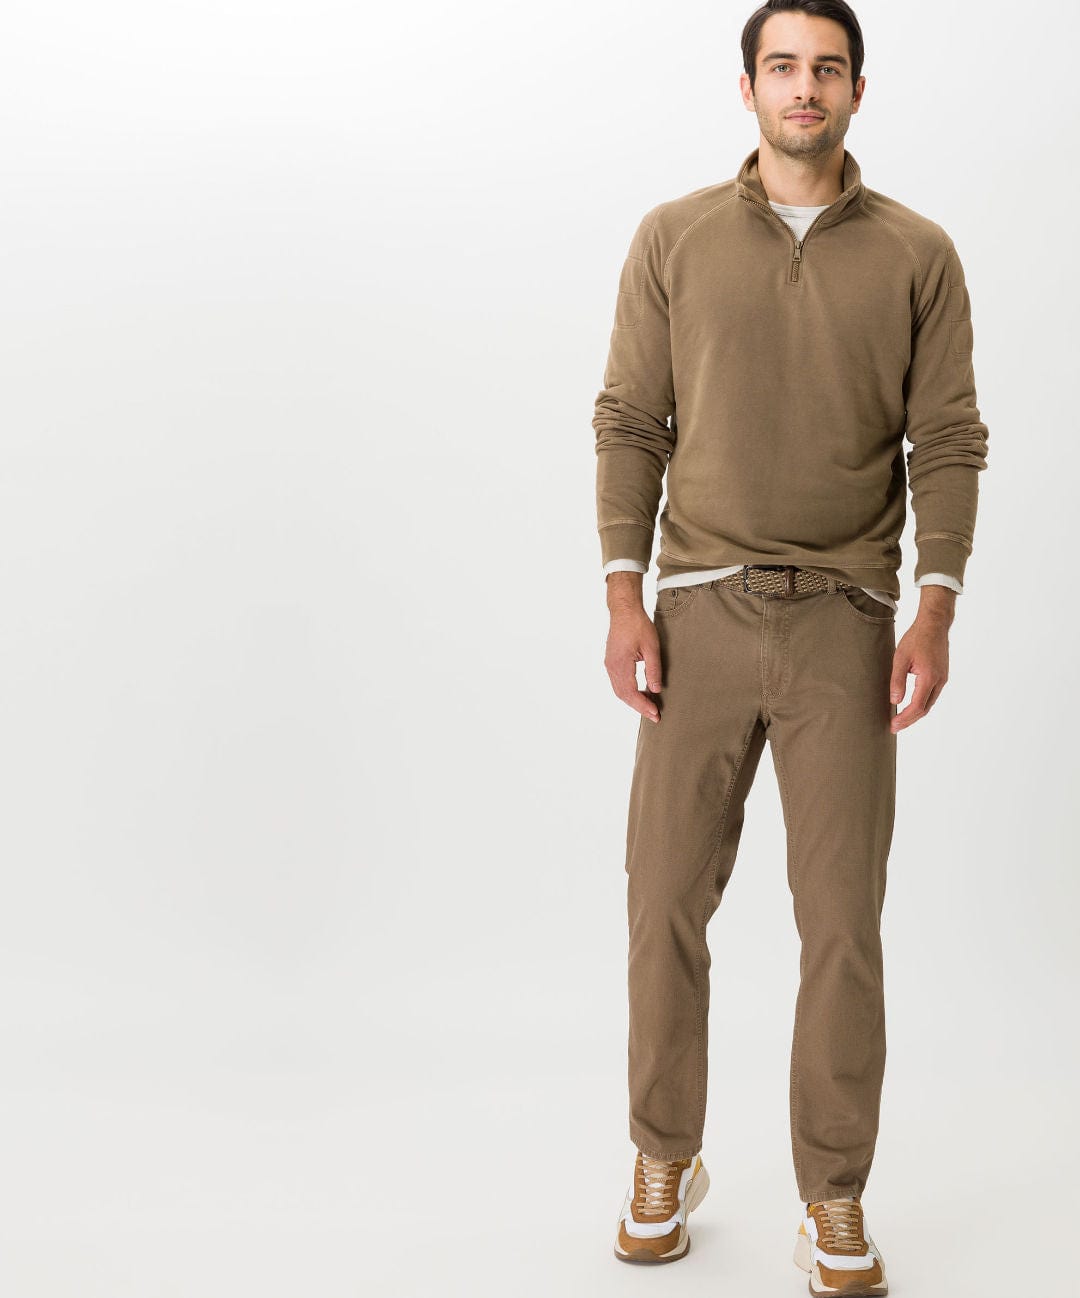 Buy Yuvan Enterprises | Fancy Latest Men Trousers (Large - 32, Blue) at  Amazon.in